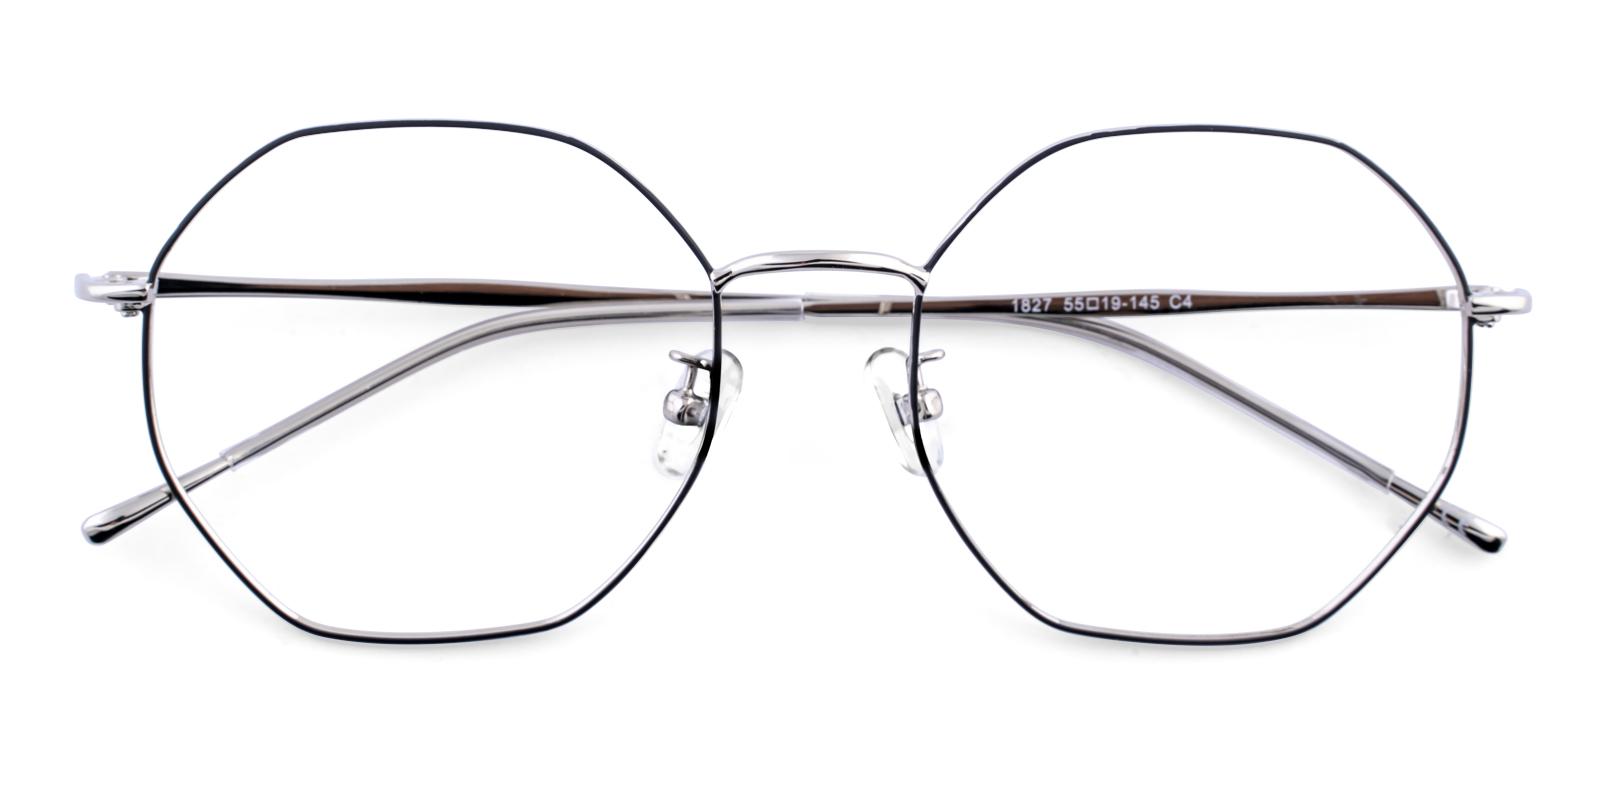 Salieur Black Metal Eyeglasses , NosePads Frames from ABBE Glasses